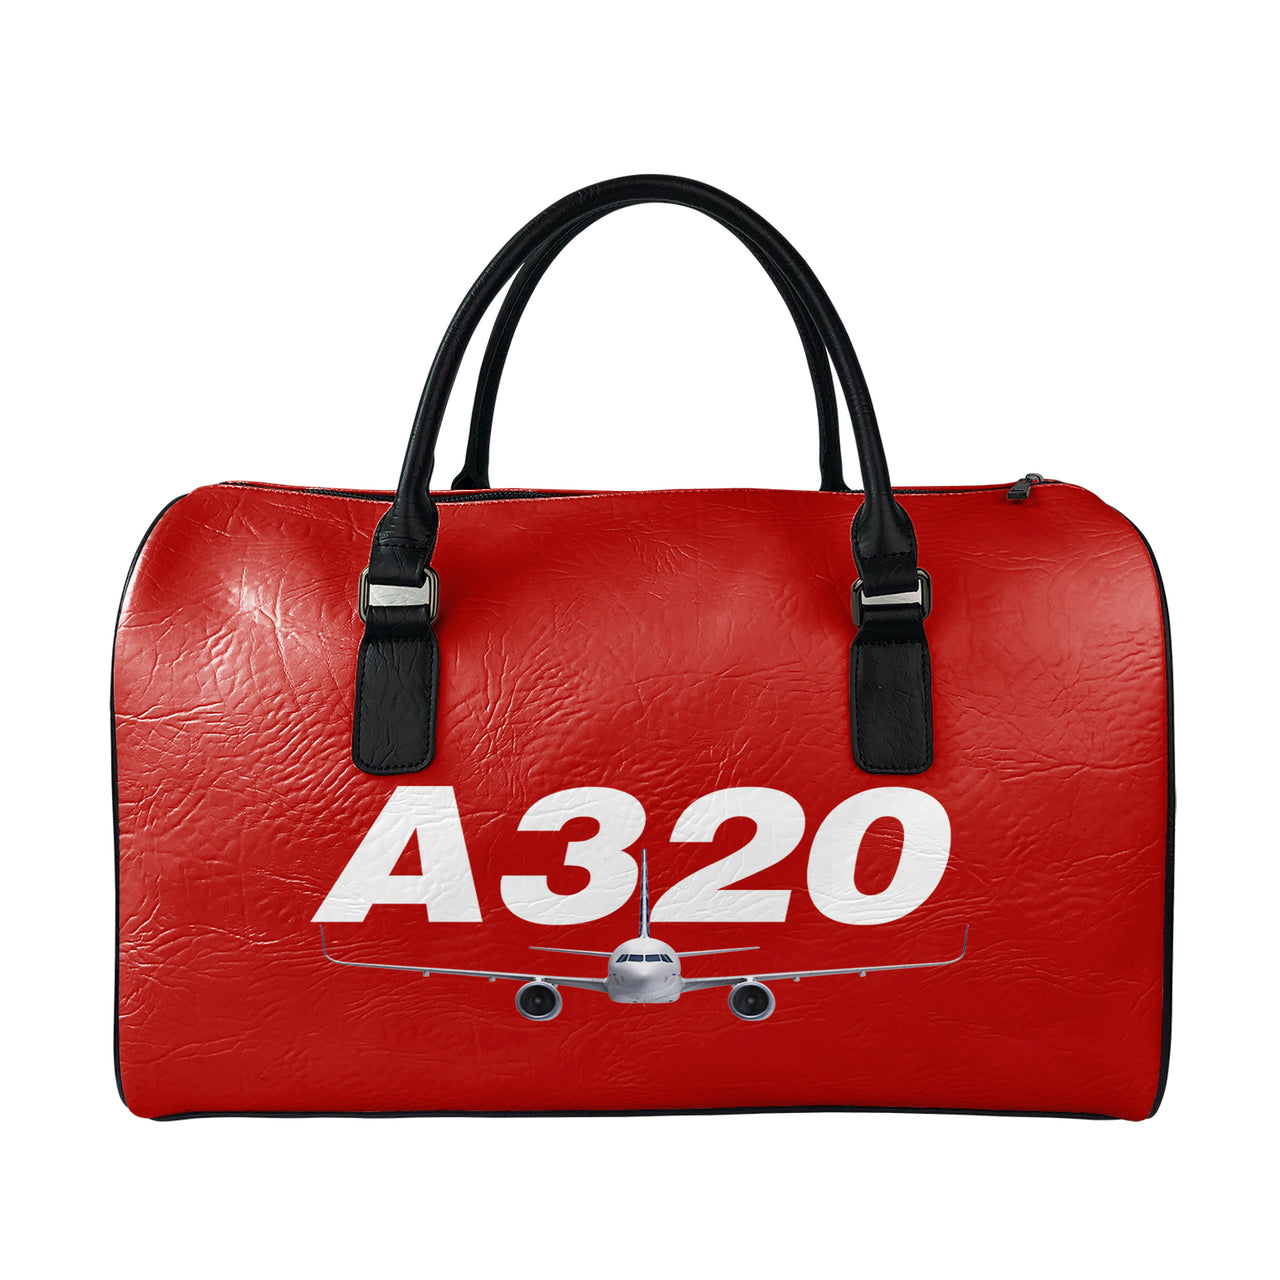 Super Airbus A320 Designed Leather Travel Bag